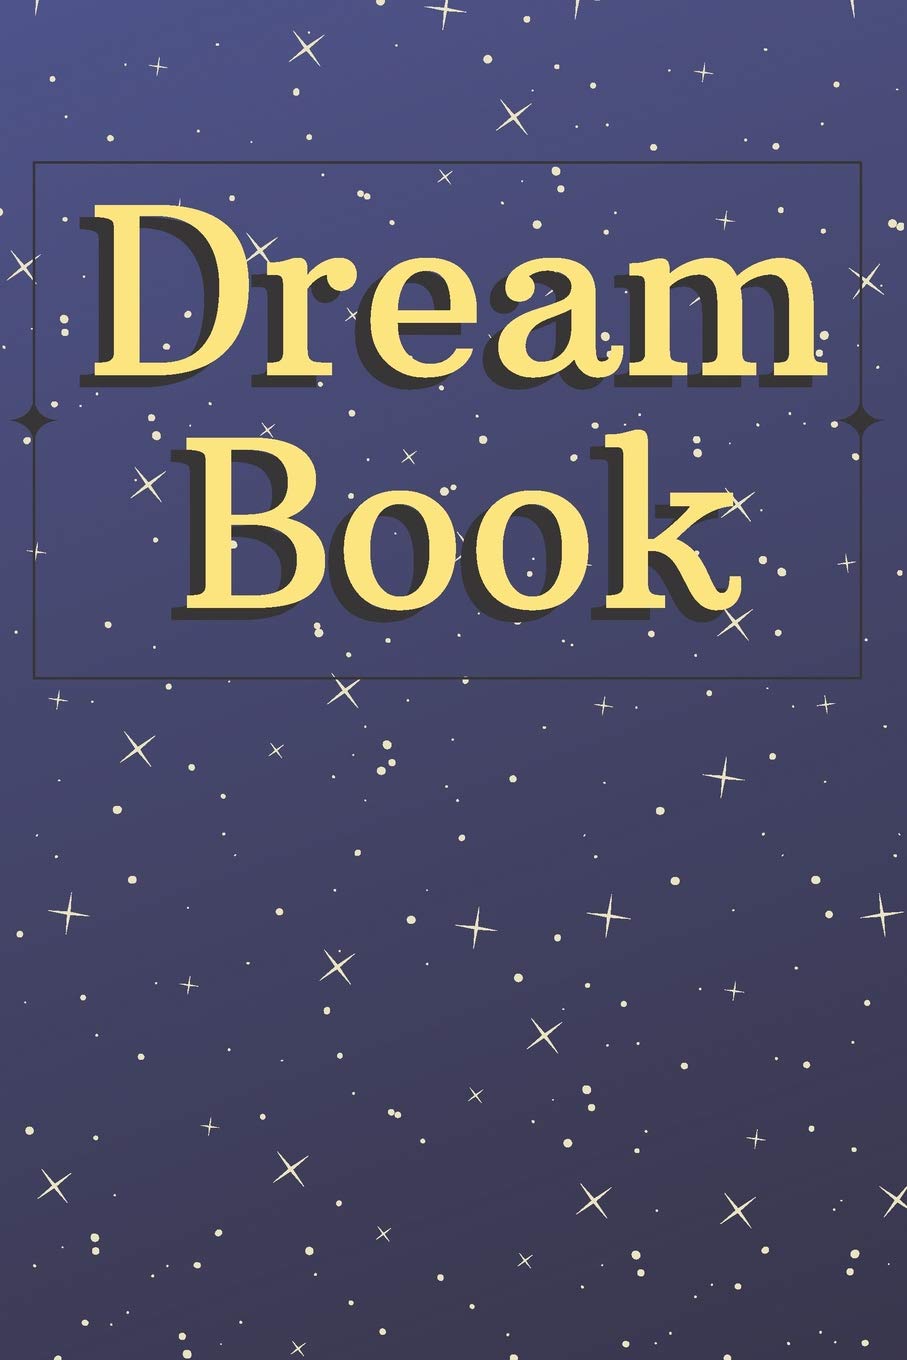 Adult dreambook. com site